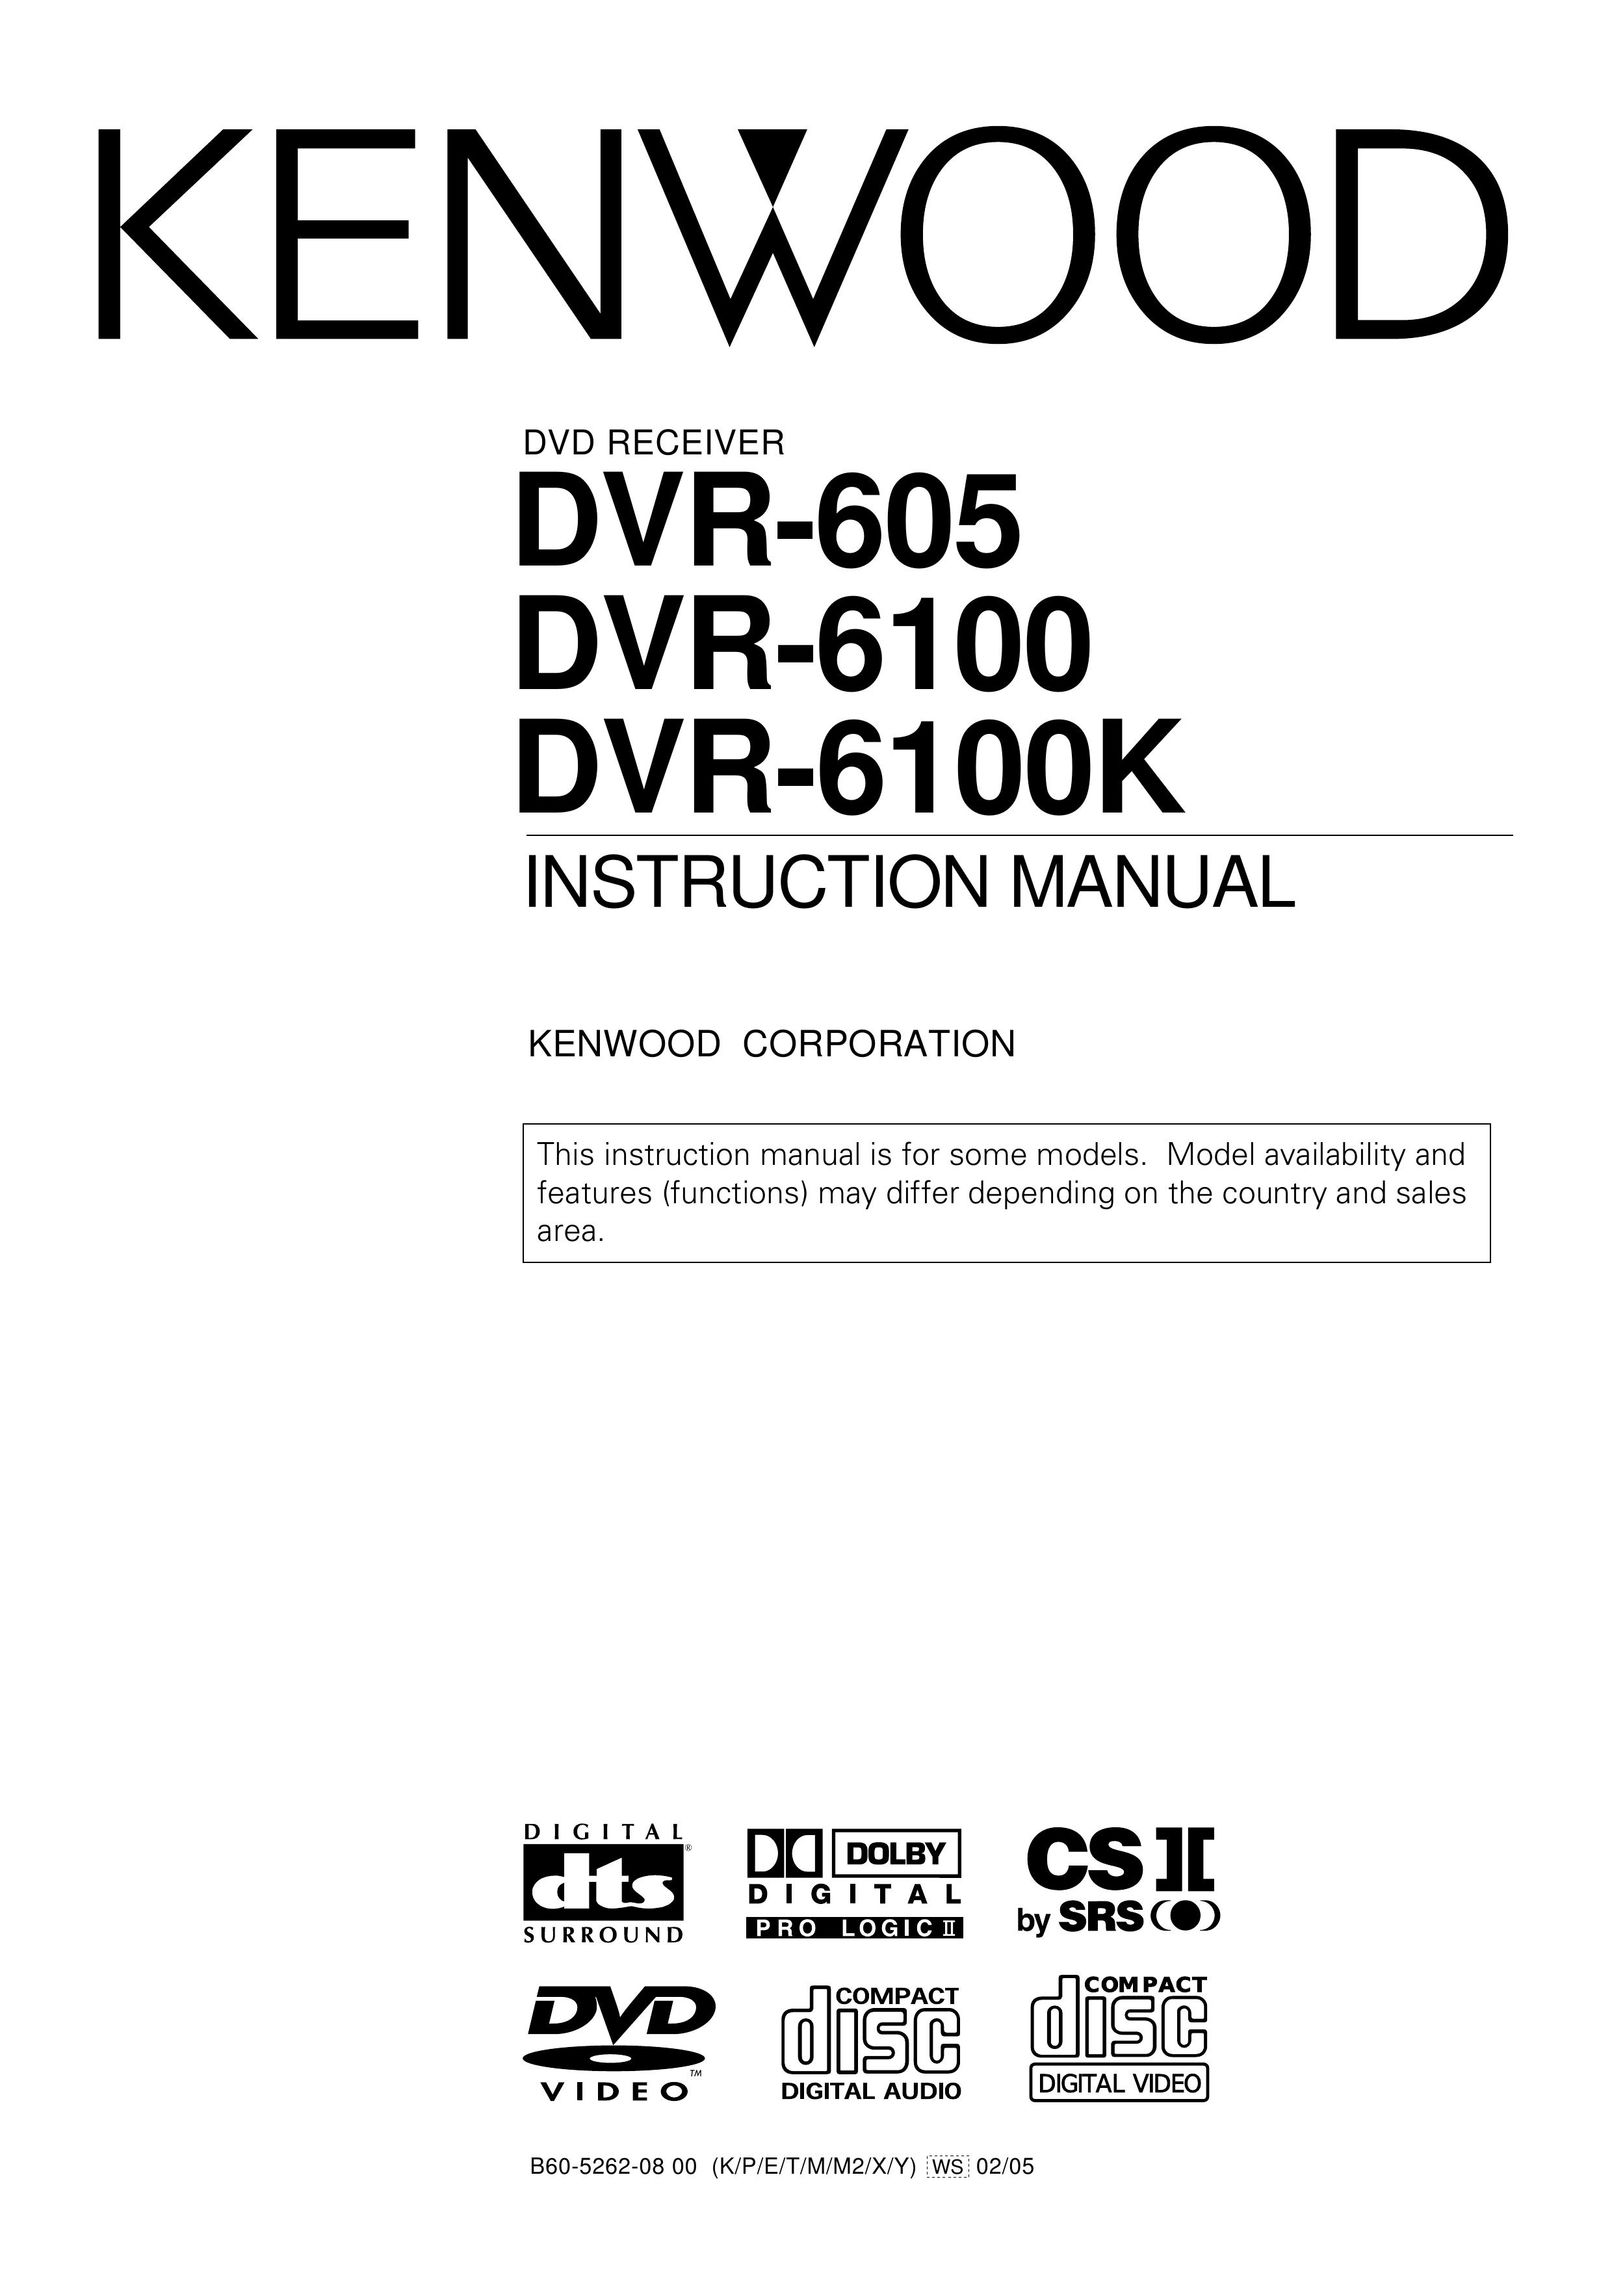 Kenwood DVR-605 DVD Player User Manual